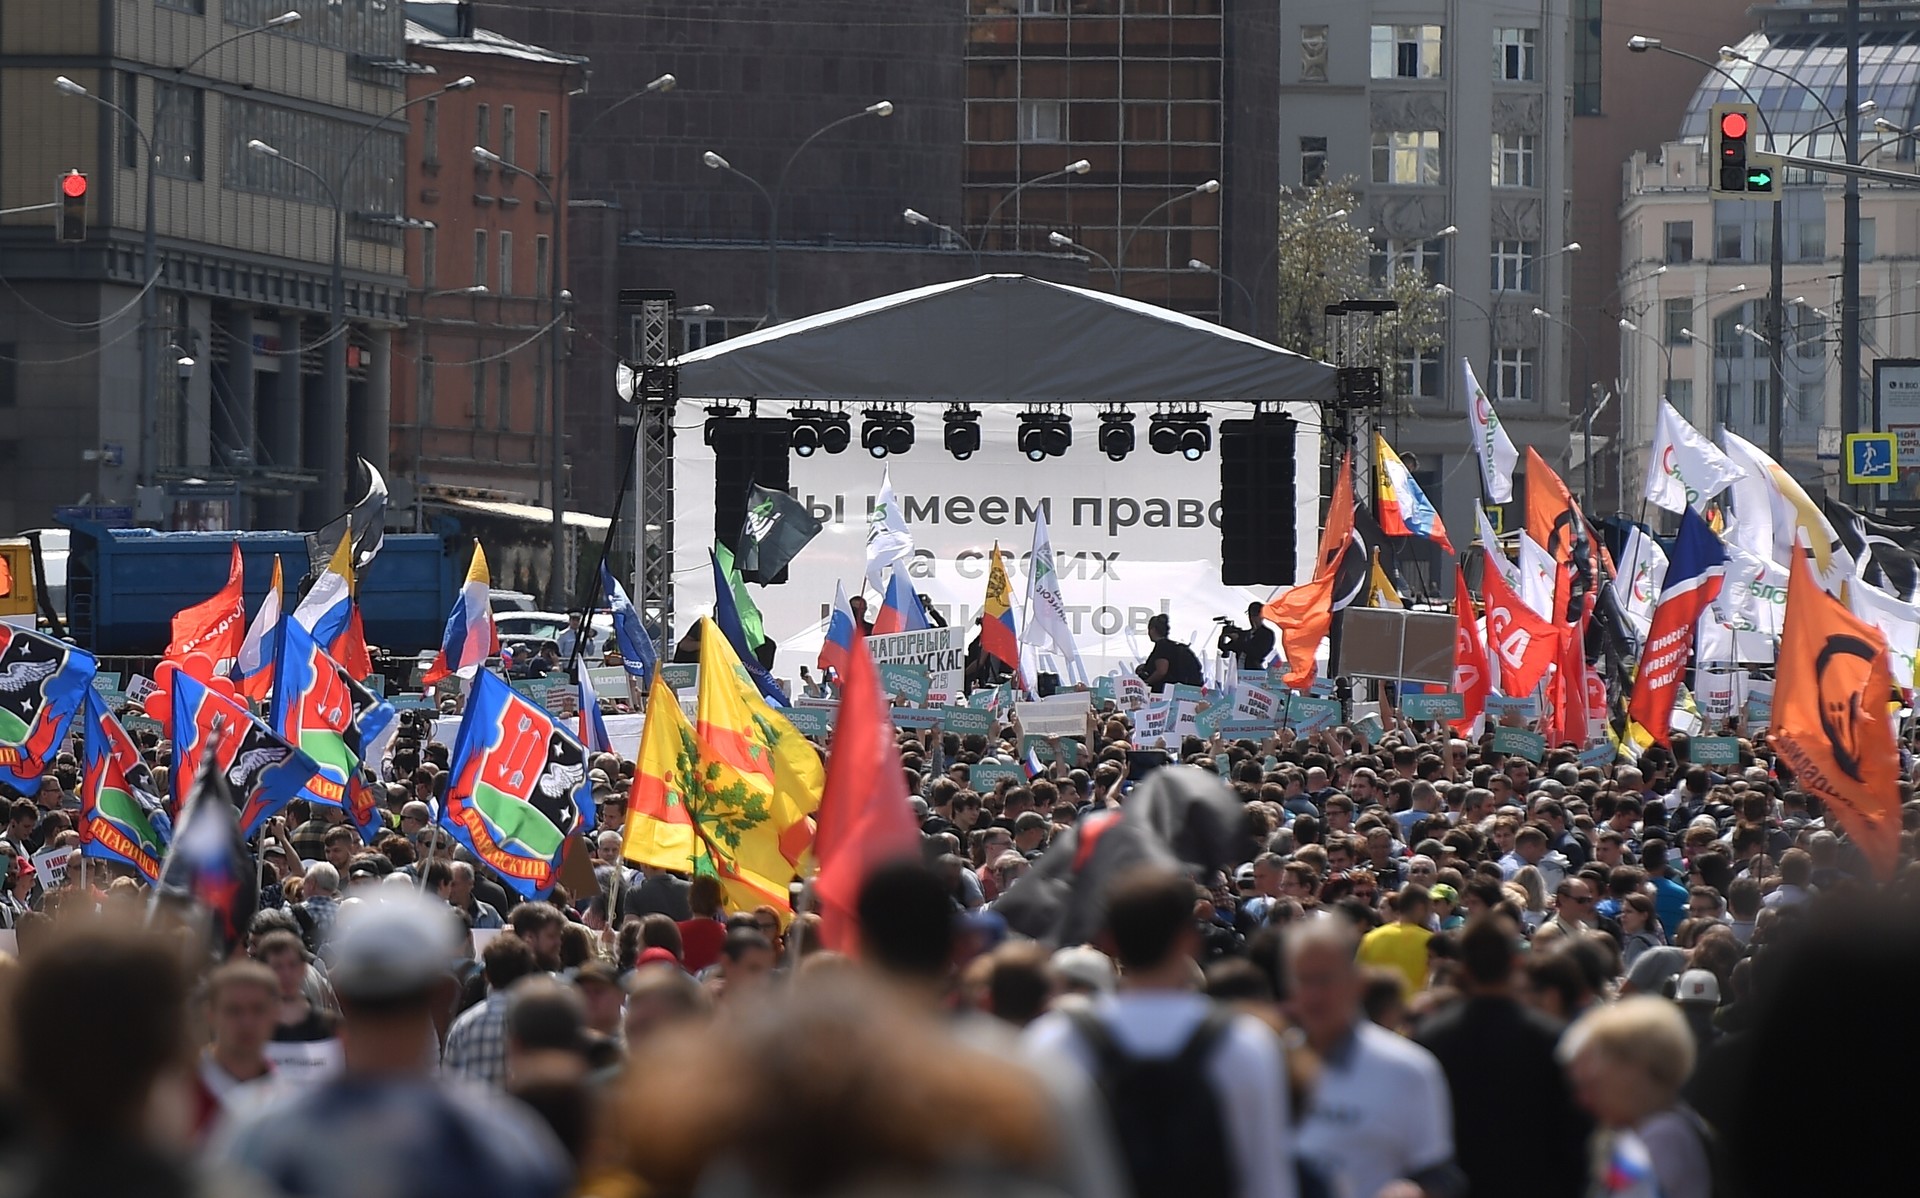 The state duma is elected by. Митинг на Сахарова 2019 август. Митинг оппозиции. Митинг оппозиции в Москве. Митинг 10 августа 2019.